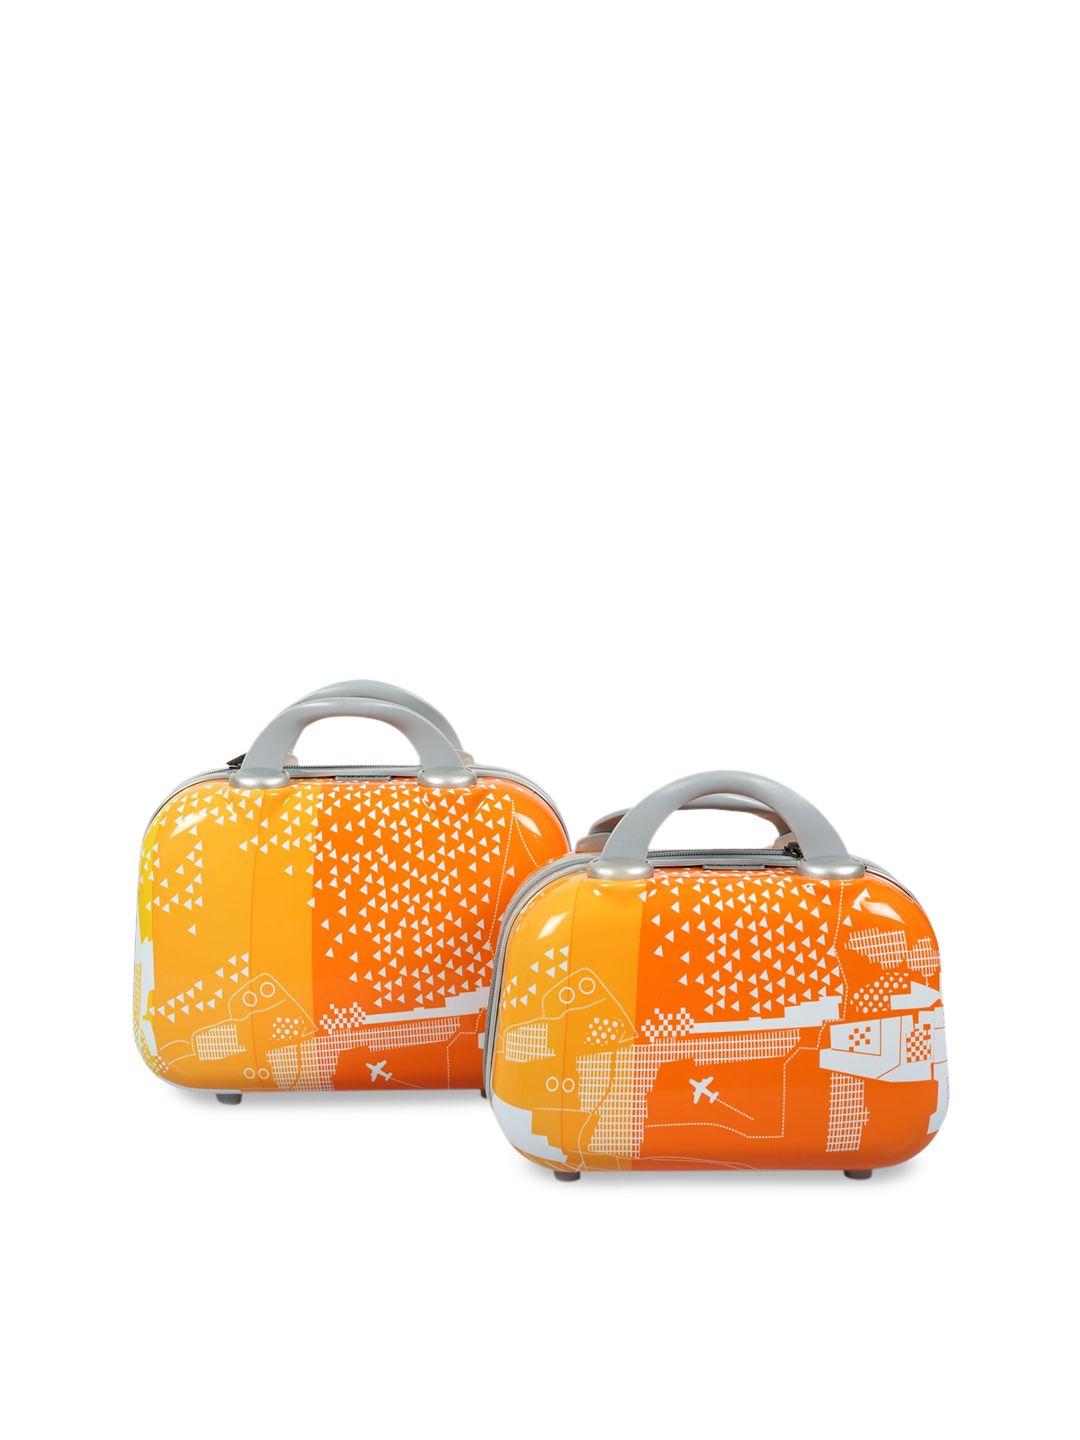 polo class unisex set of 2 orange & white printed travel vanity bags